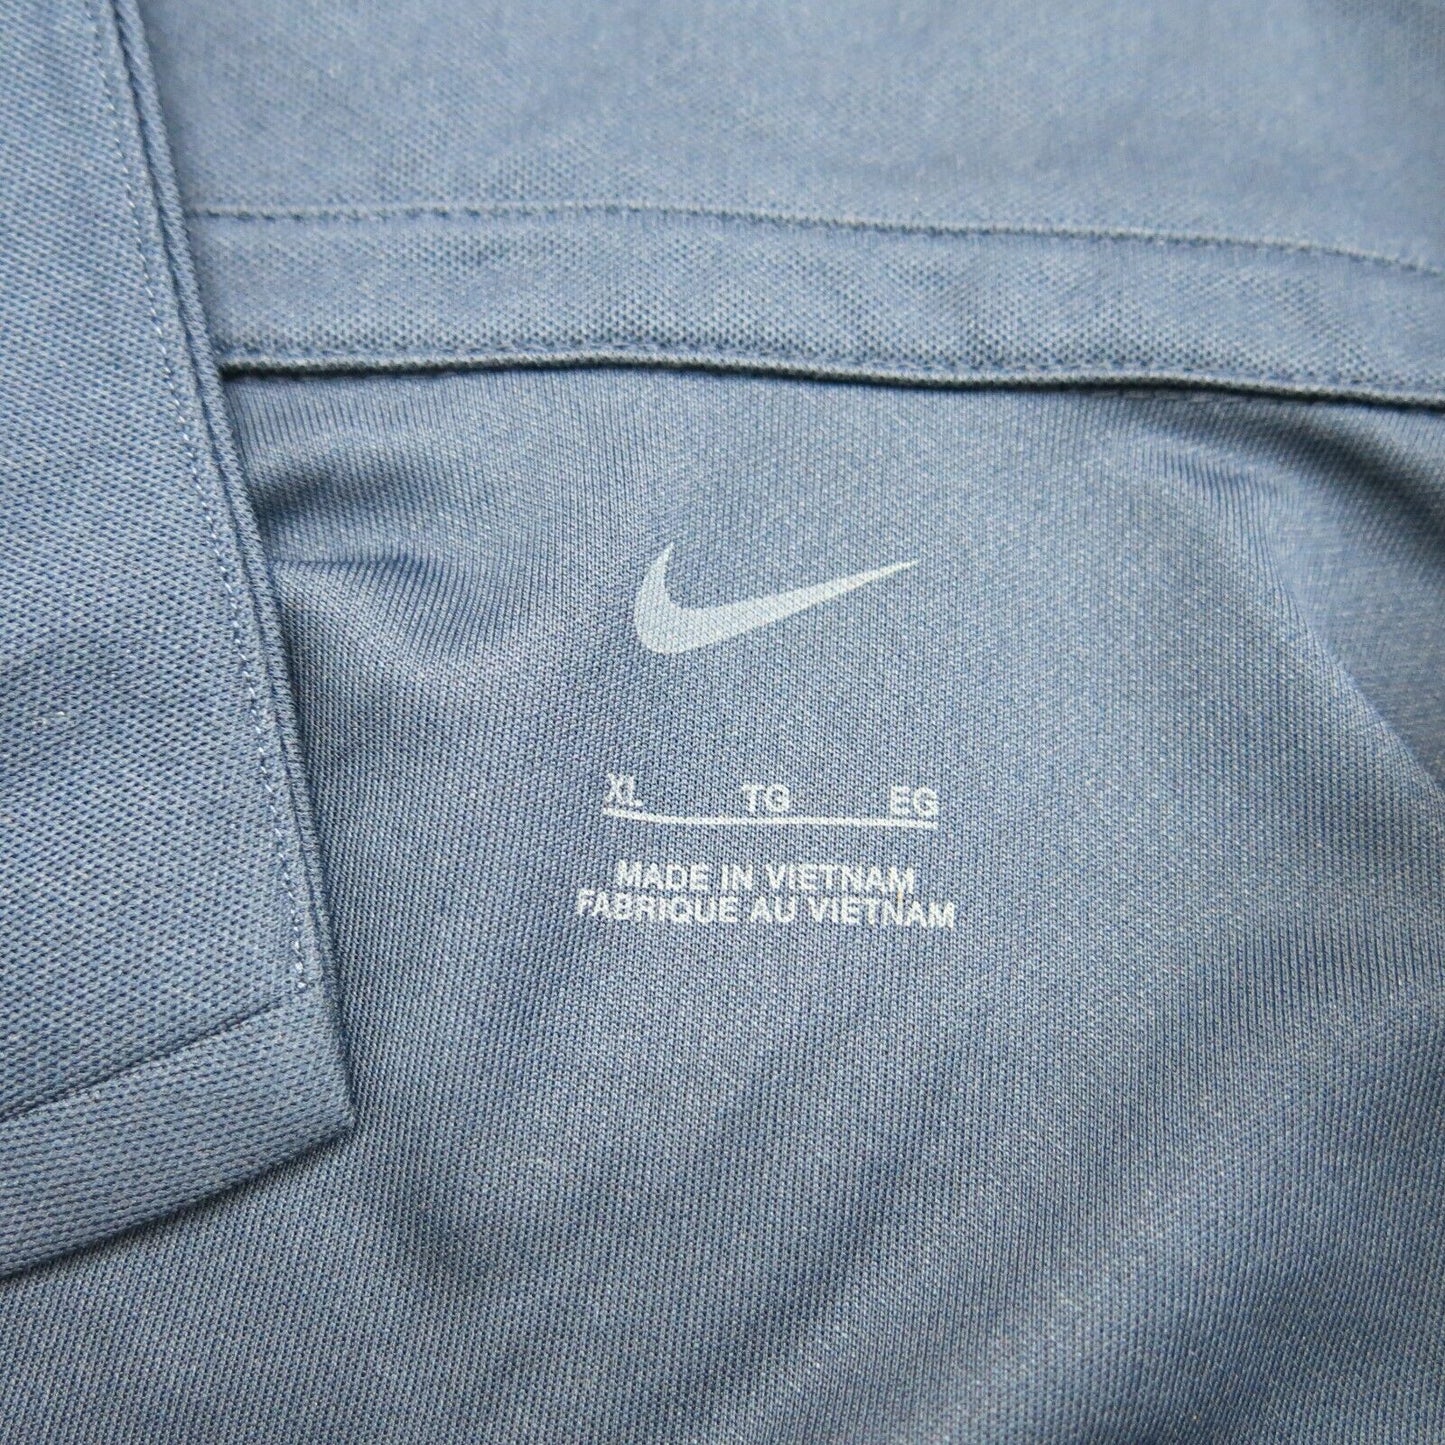 Nike Womens Activewear Sweatshirt Top Great Lakes Long Sleeves Navy Blue Size XL